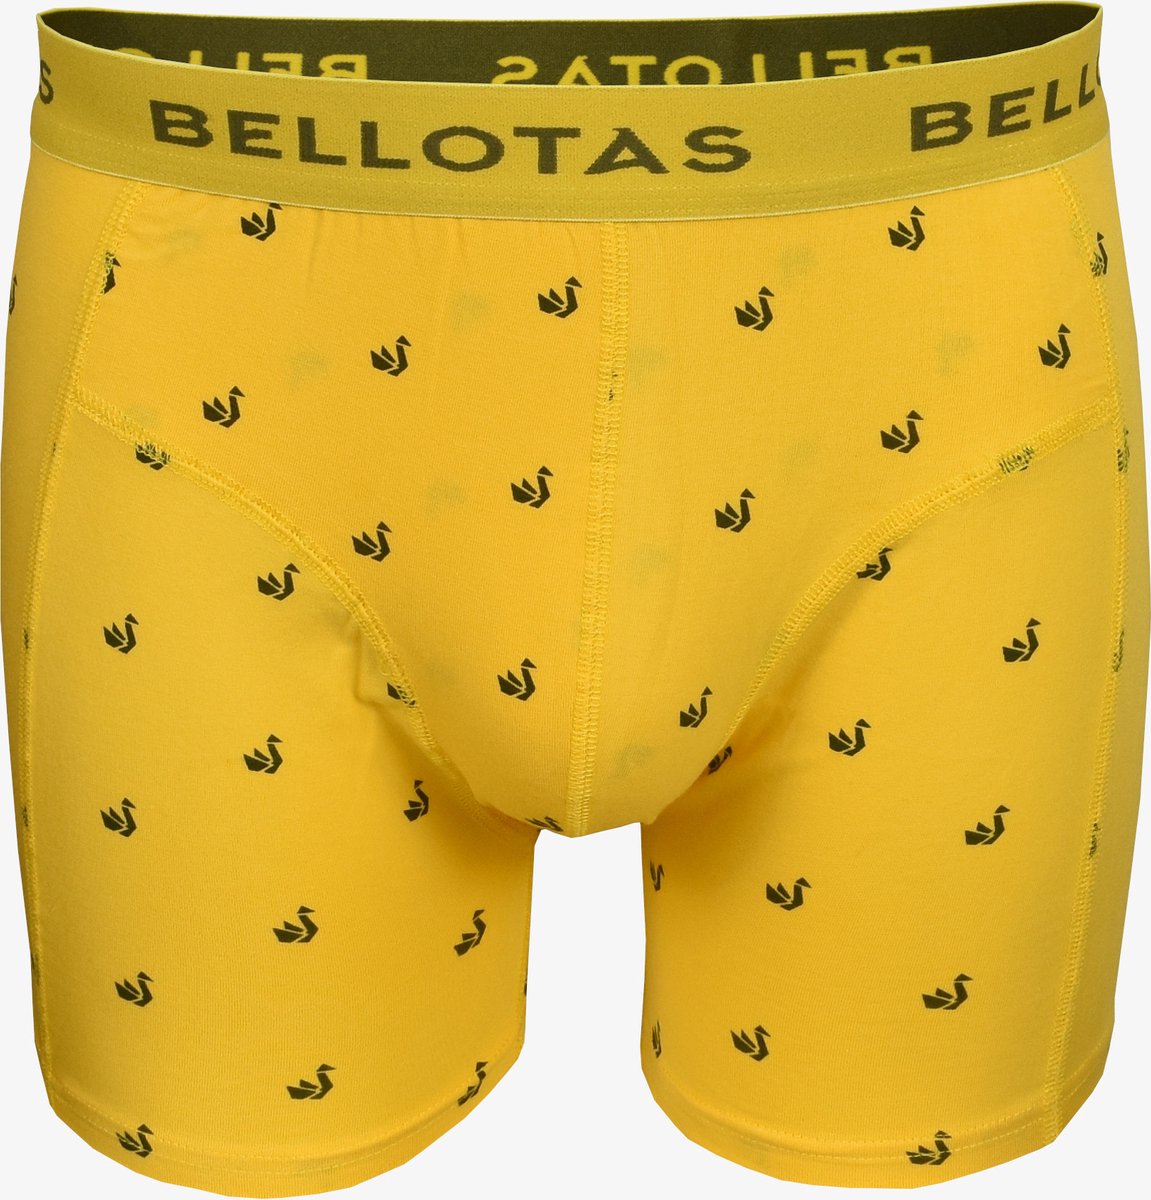 Bellotas - Boxershort - Odile L